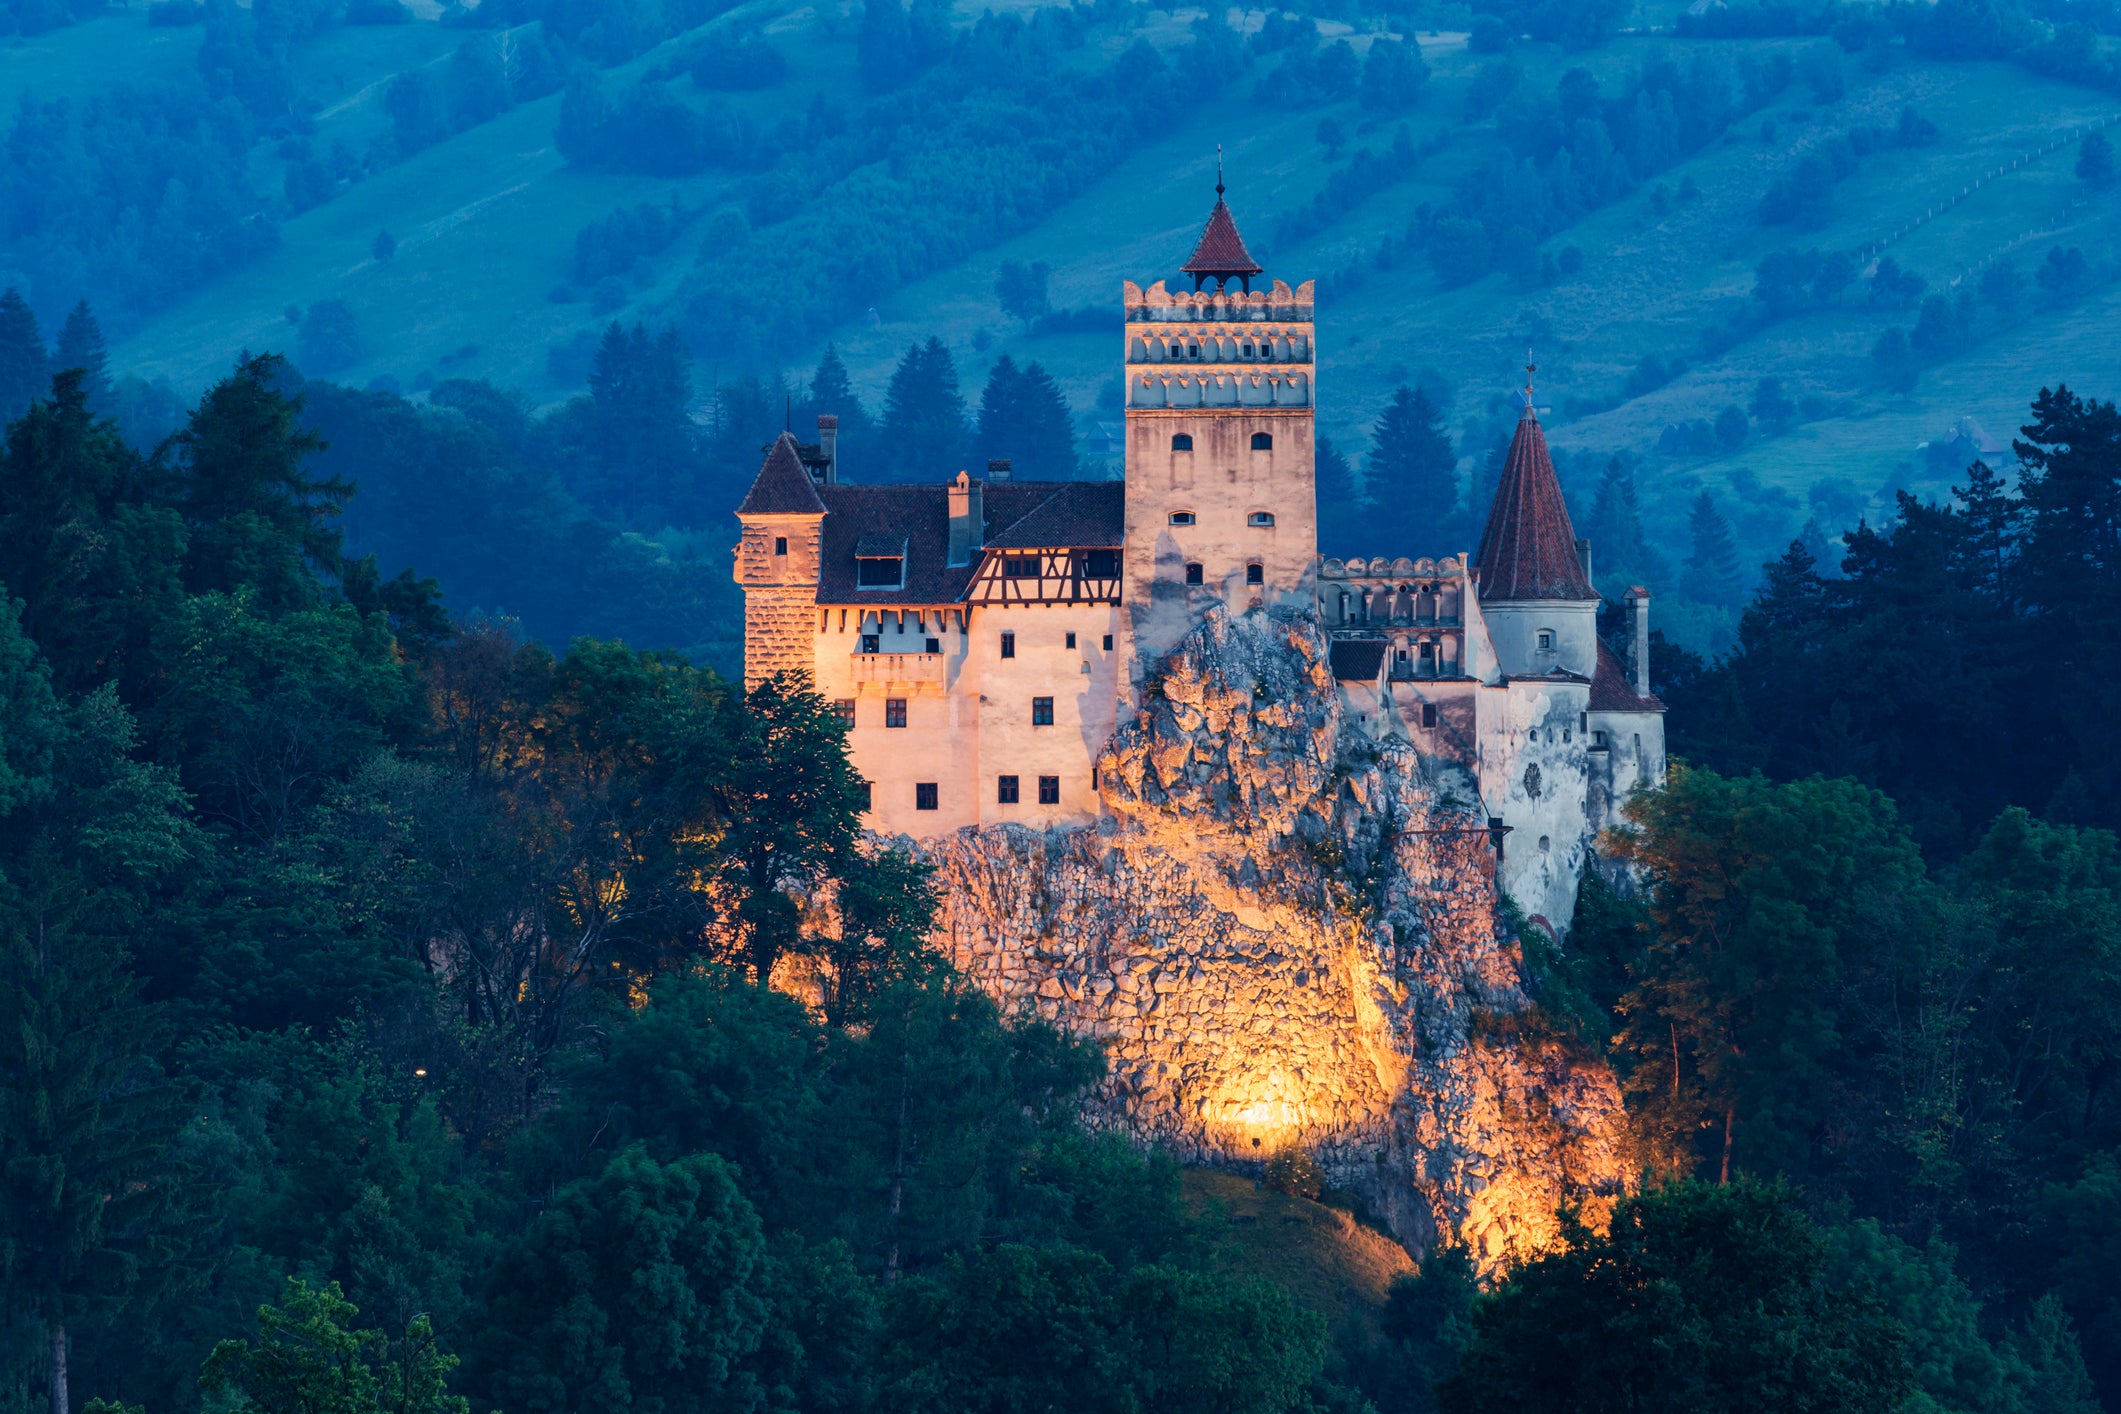 Illuminated castle on hill, Bran, Transylvania, Romania